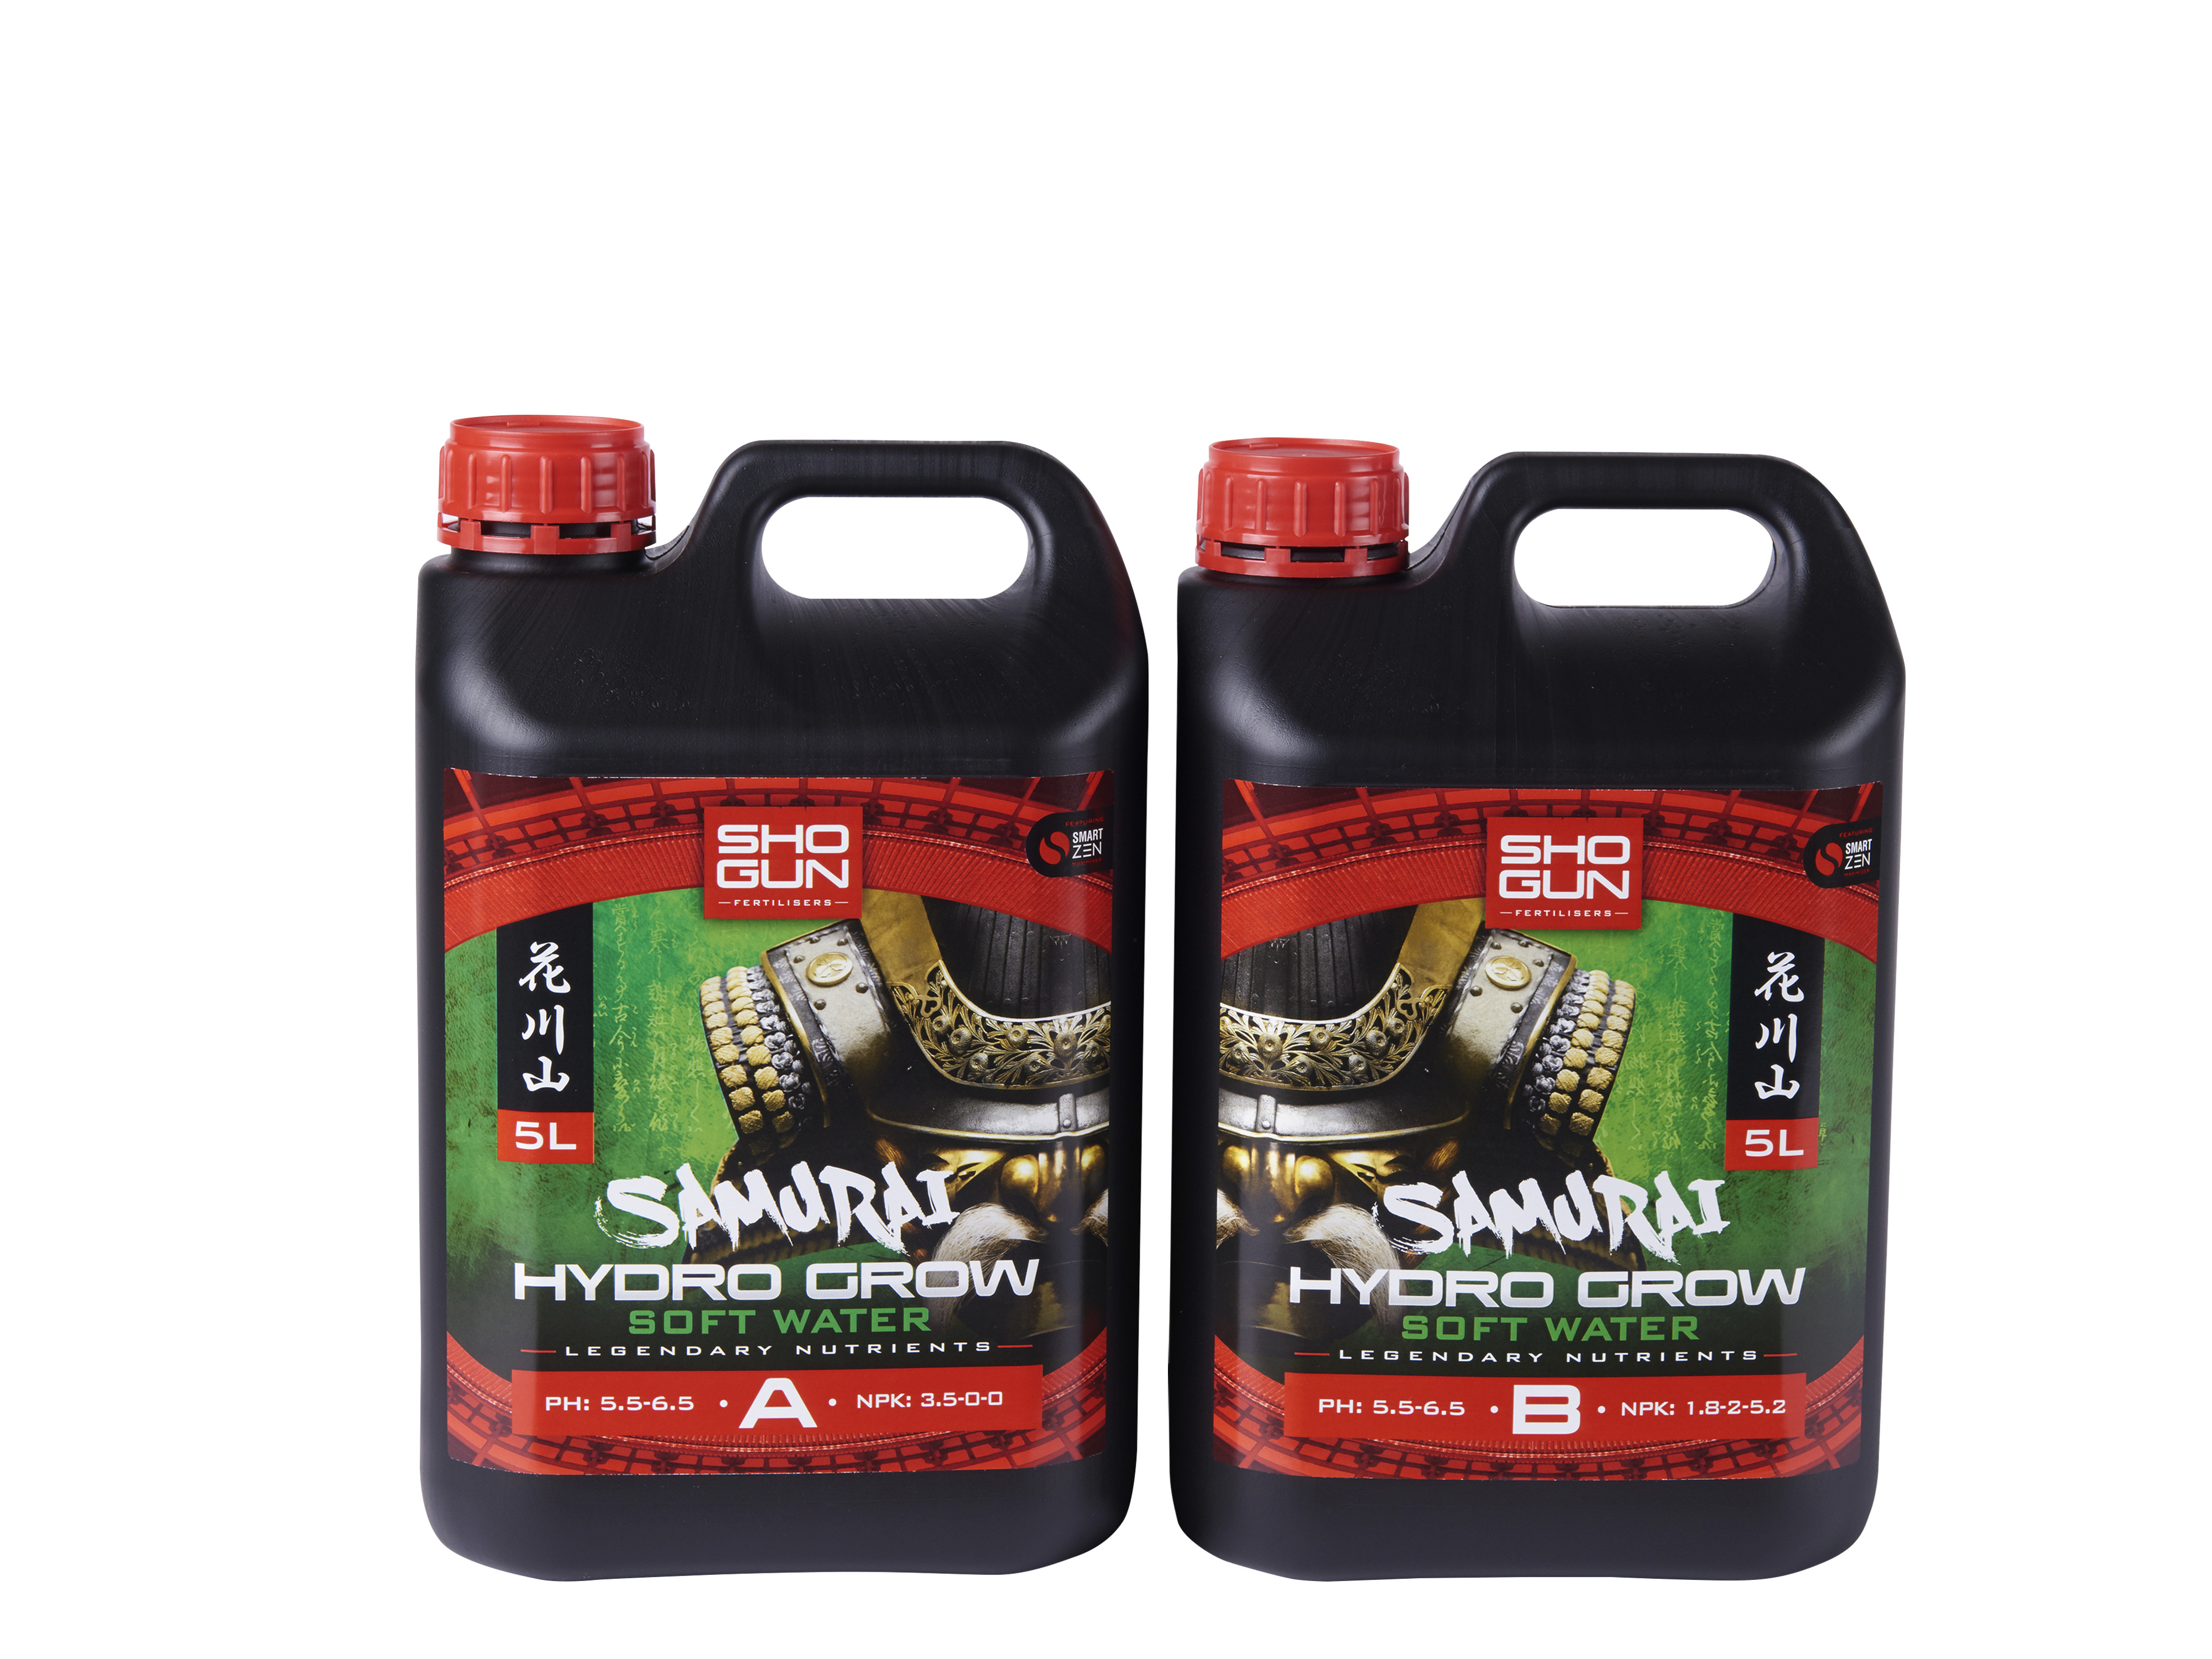 Shogun Samurai Hydro Grow A+B 5l měkká voda